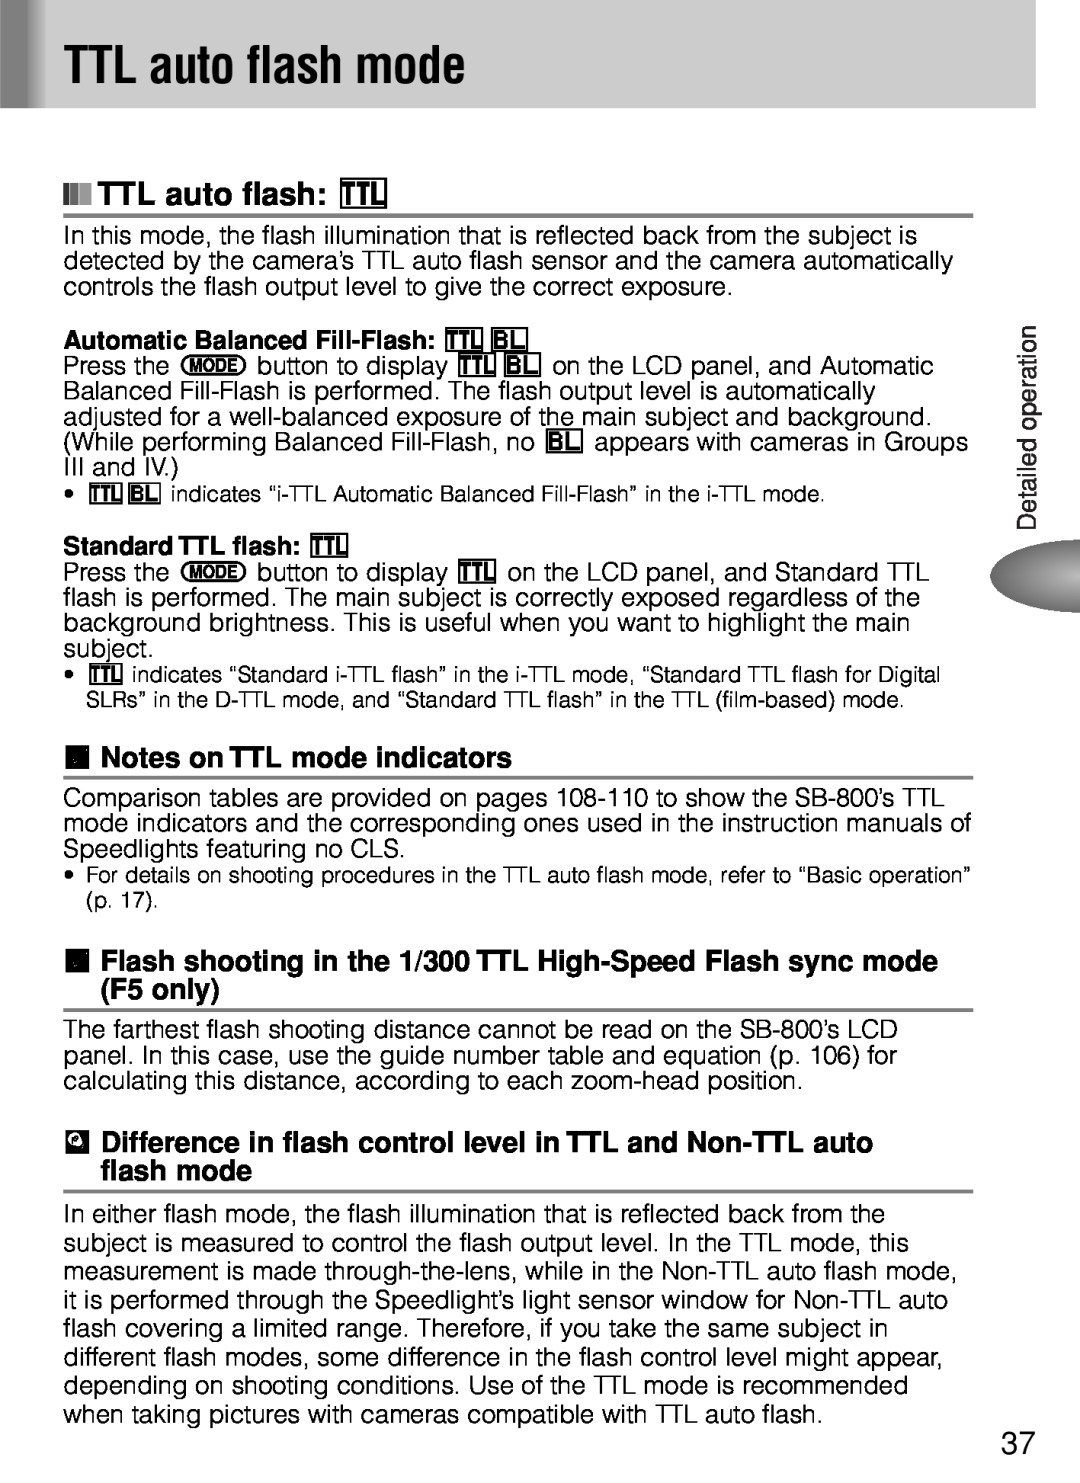 Nikon SB-800 TTL auto flash mode, TTL auto flash D, t Notes on TTL mode indicators, Automatic Balanced Fill-Flash Do 